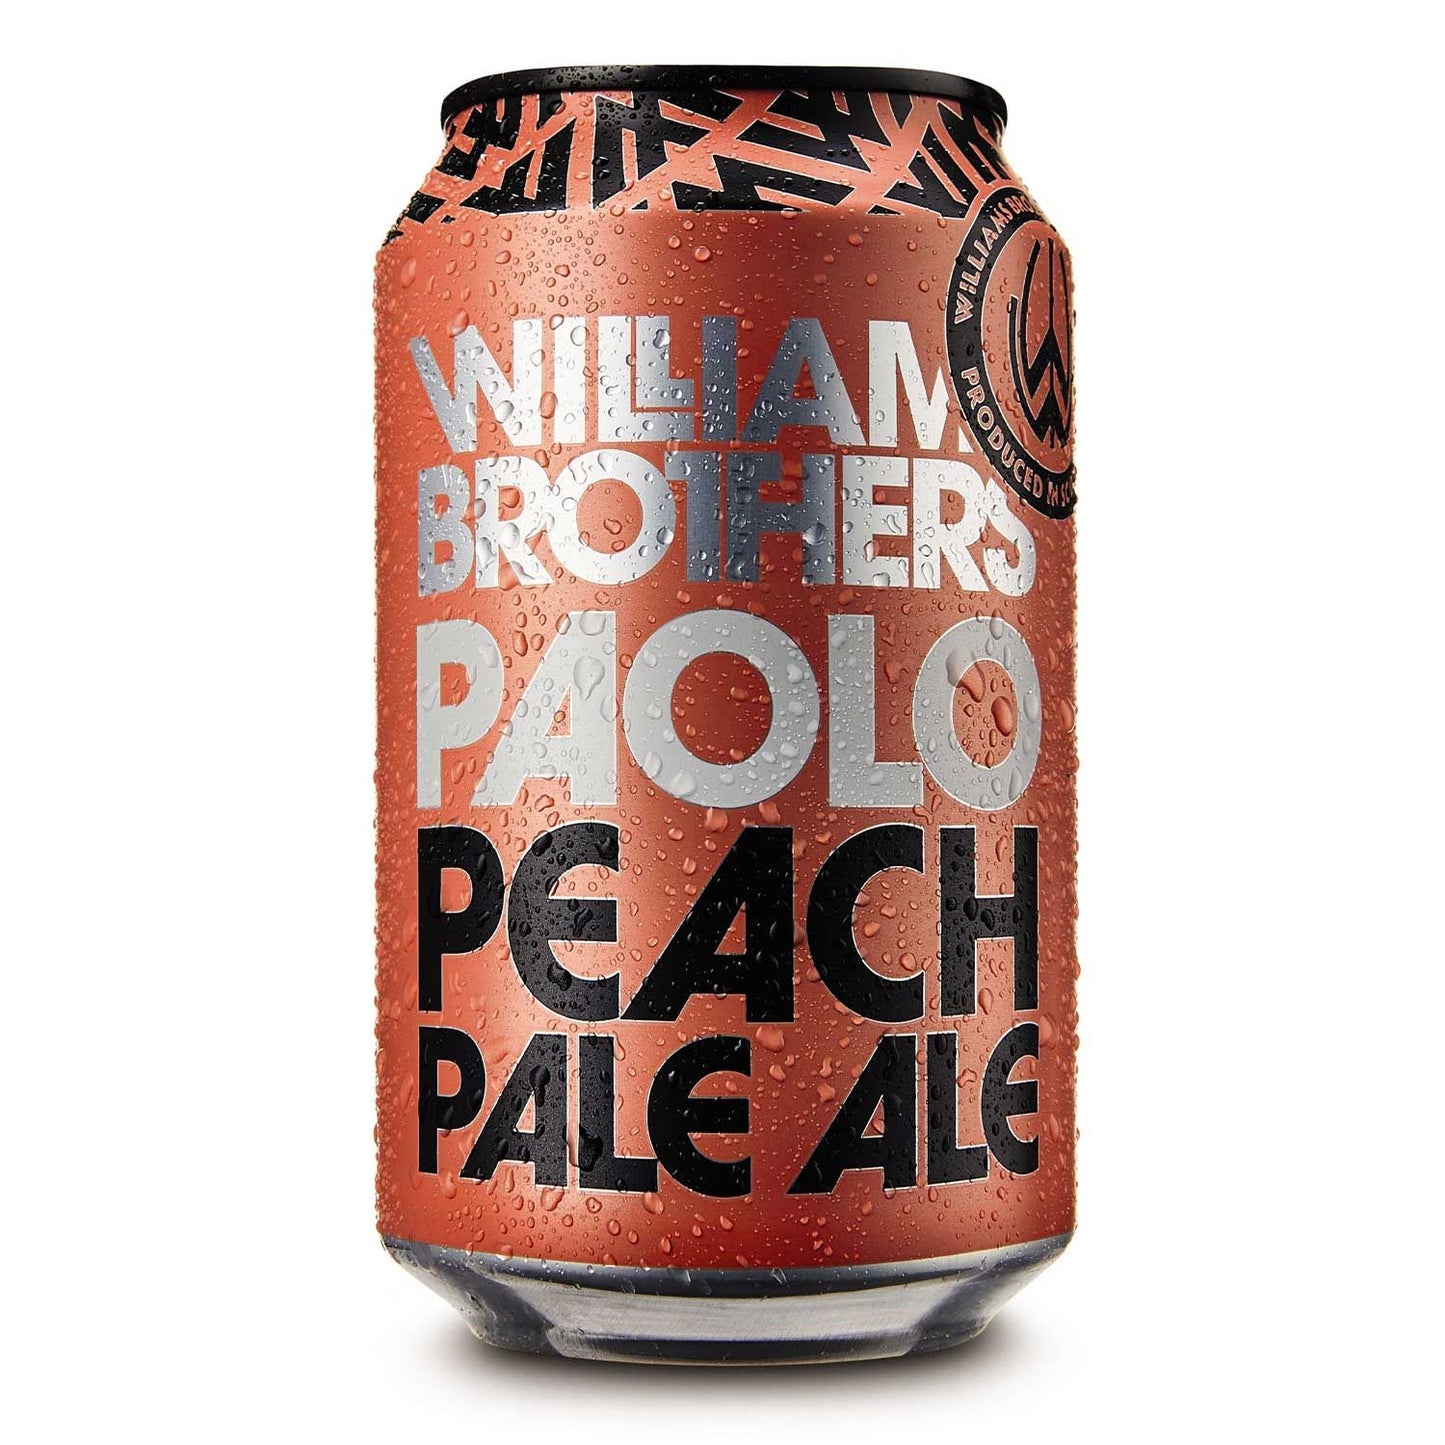 Williams Bros Brewing Co. Paolo Peach Pale Ale 330ml